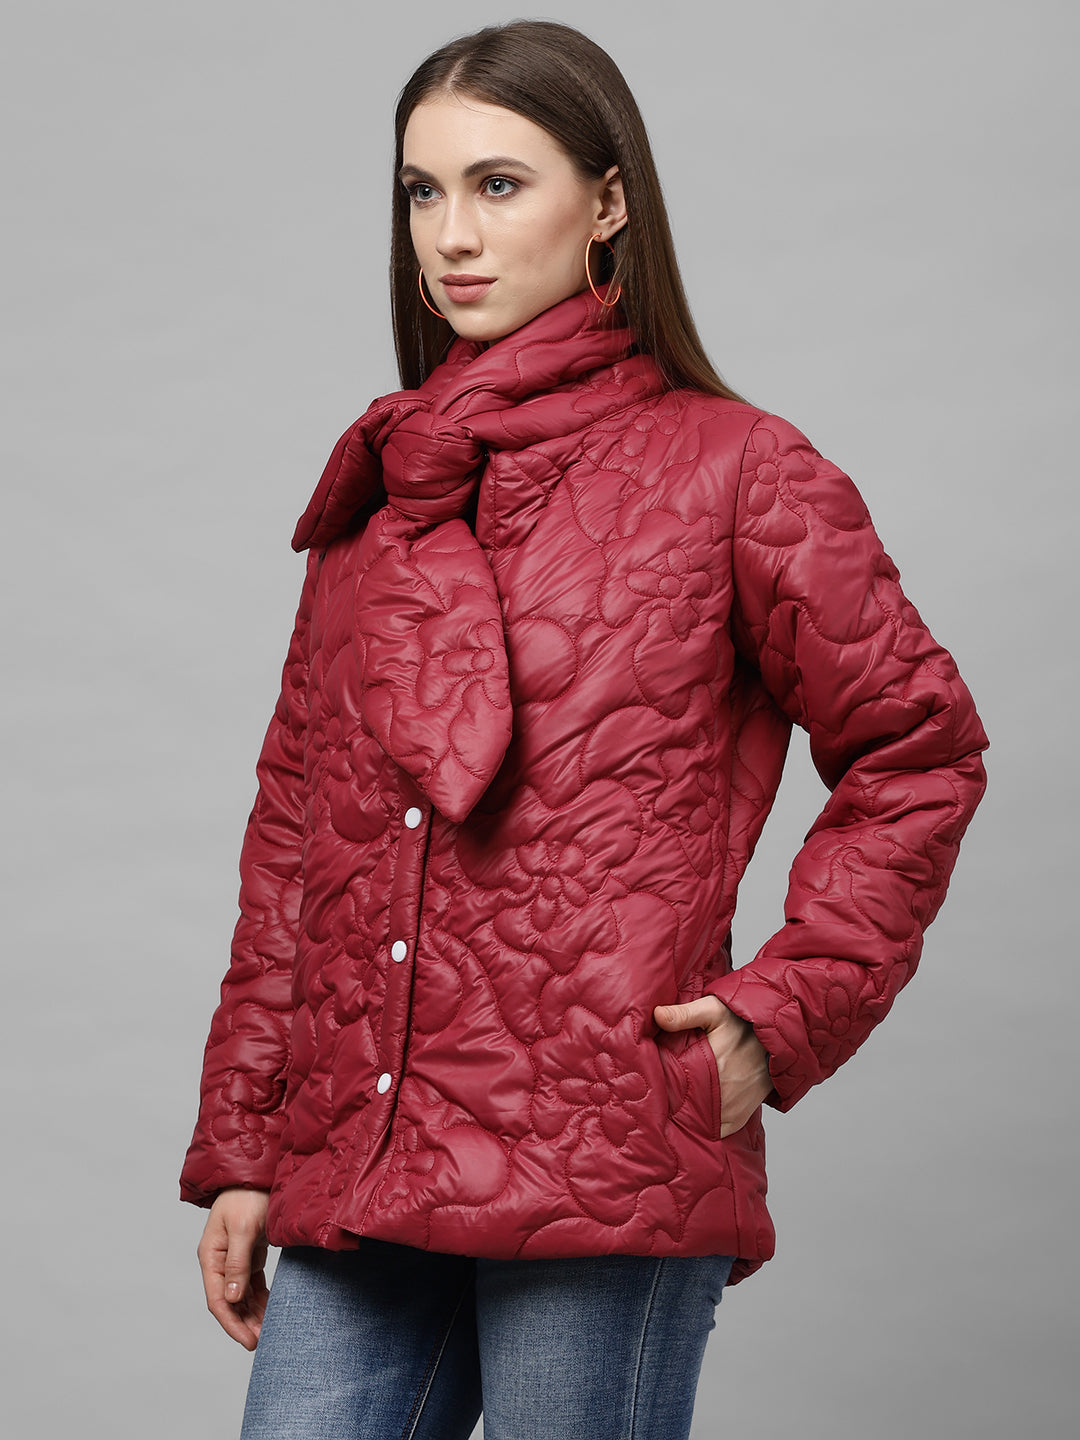 Athena Women Burgundy Solid Lightweight Quilted Jacket - Athena Lifestyle